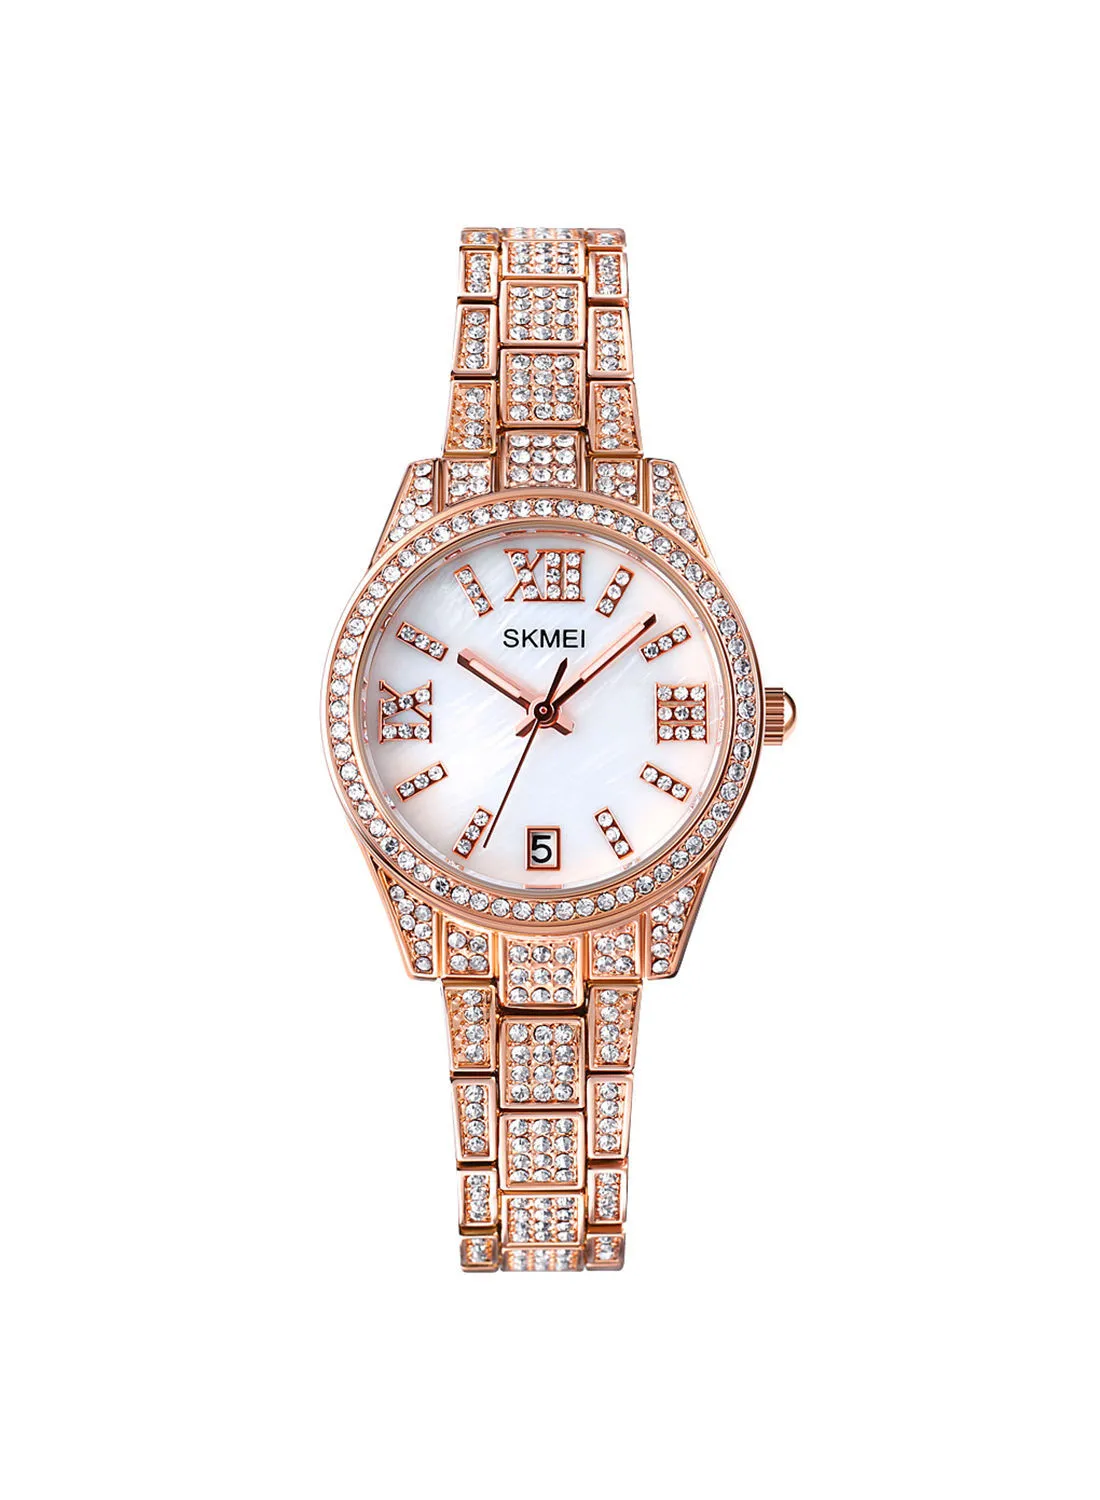 SKMEI Women's Women's Diamond Quartz Watch 1471